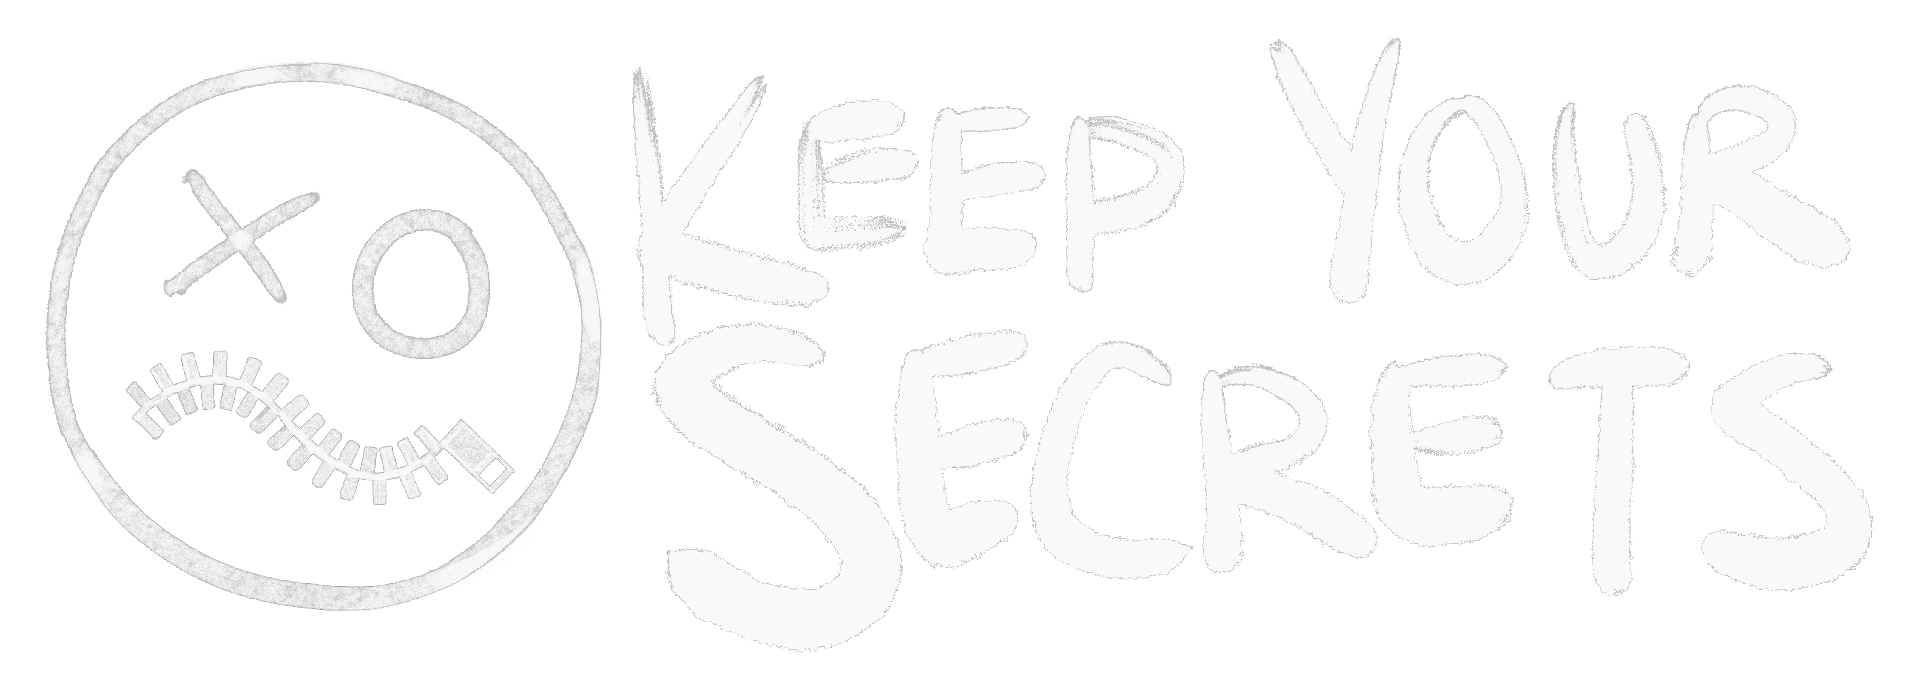 Keep Your Secrets